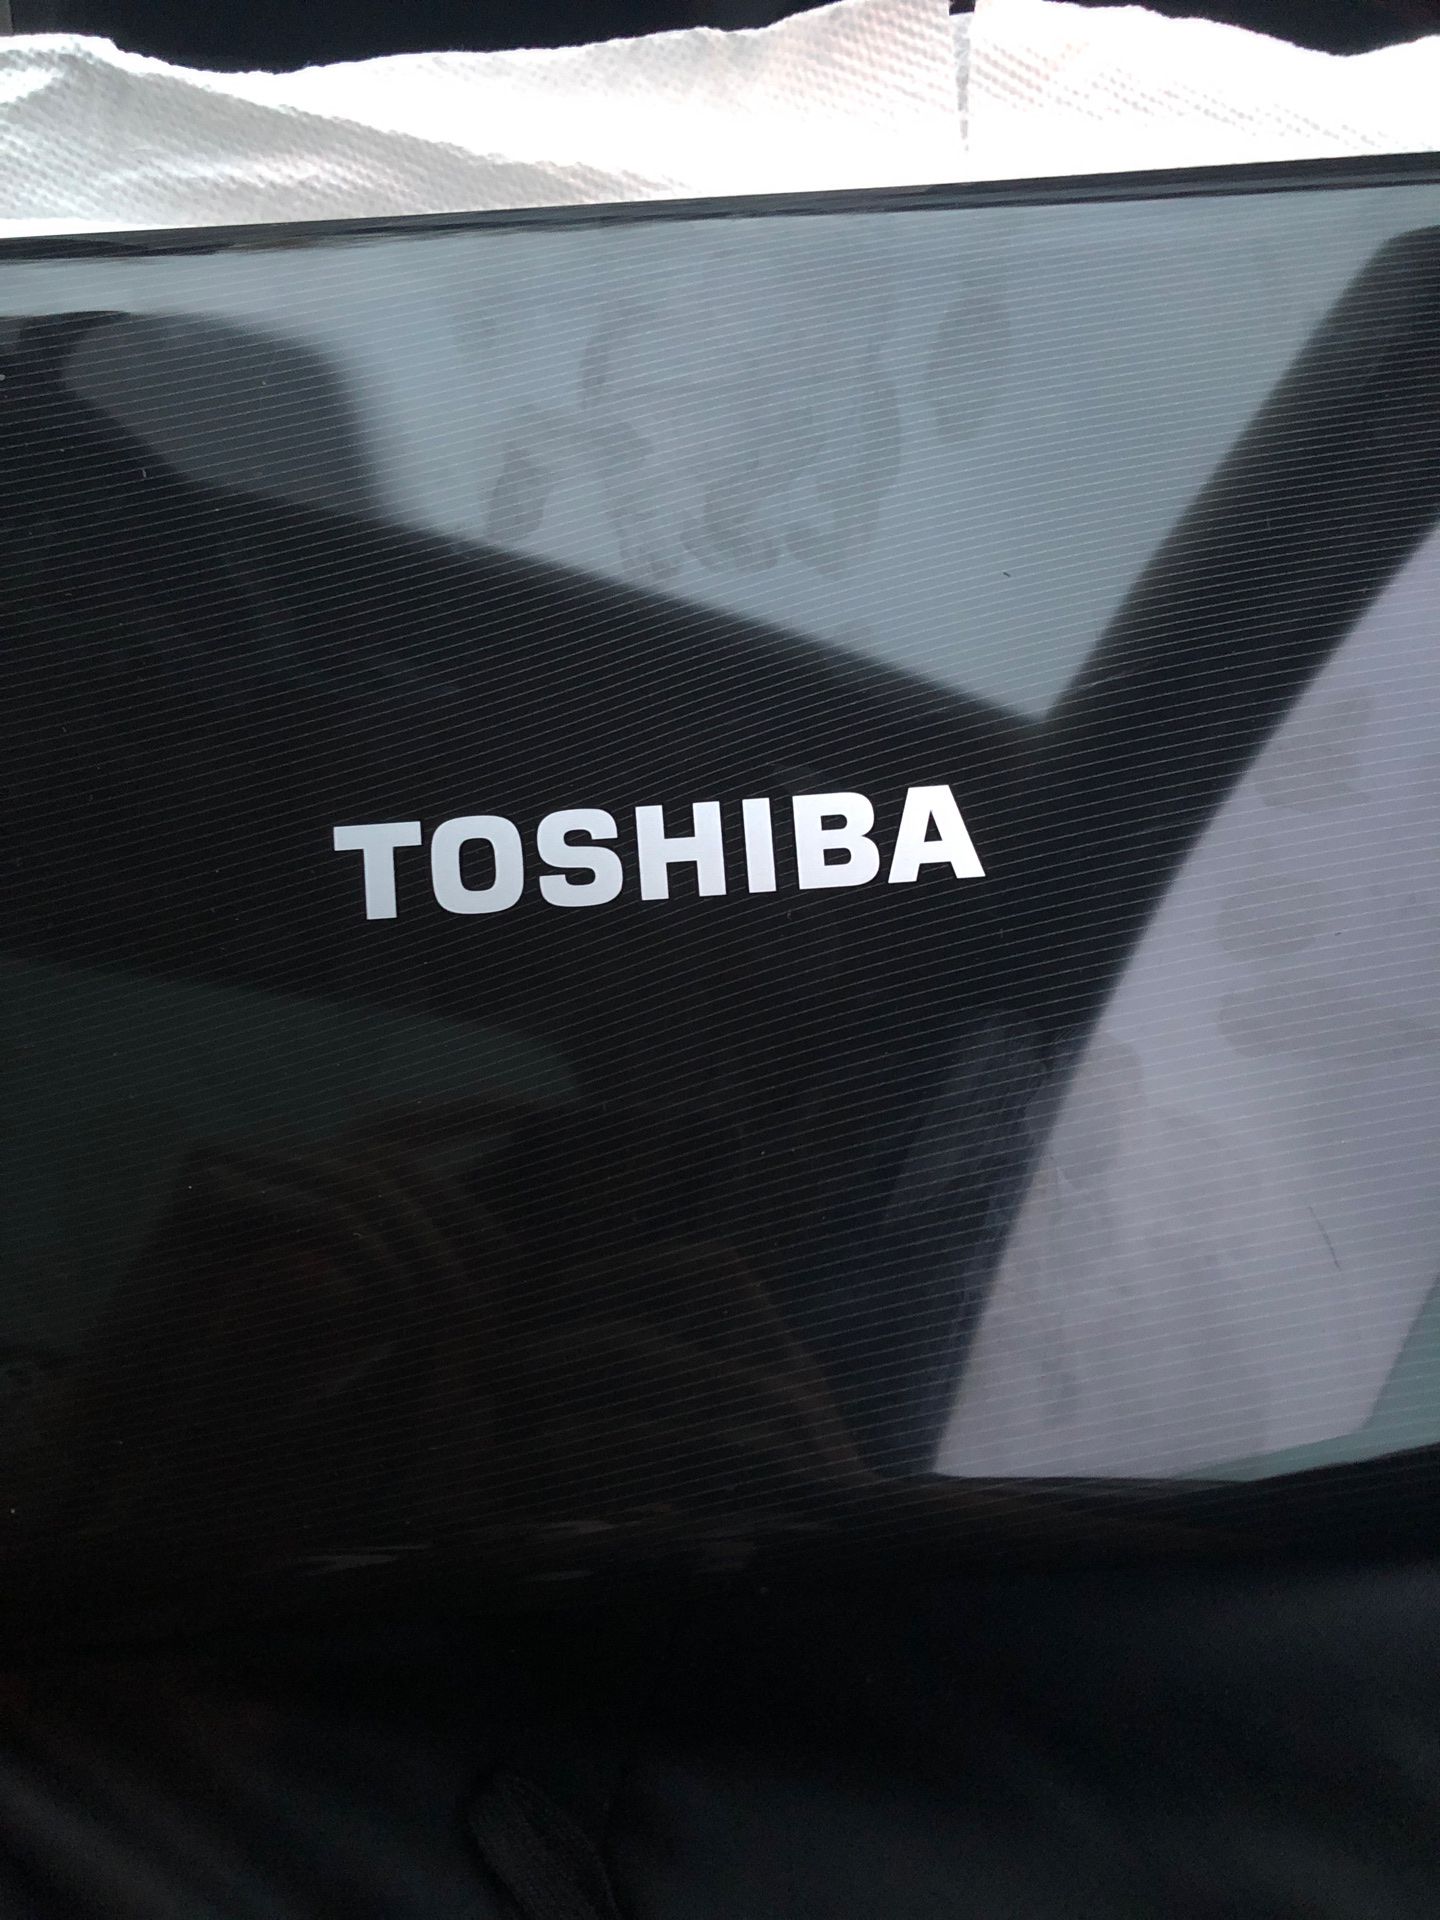 Toshiba laptop windows 7